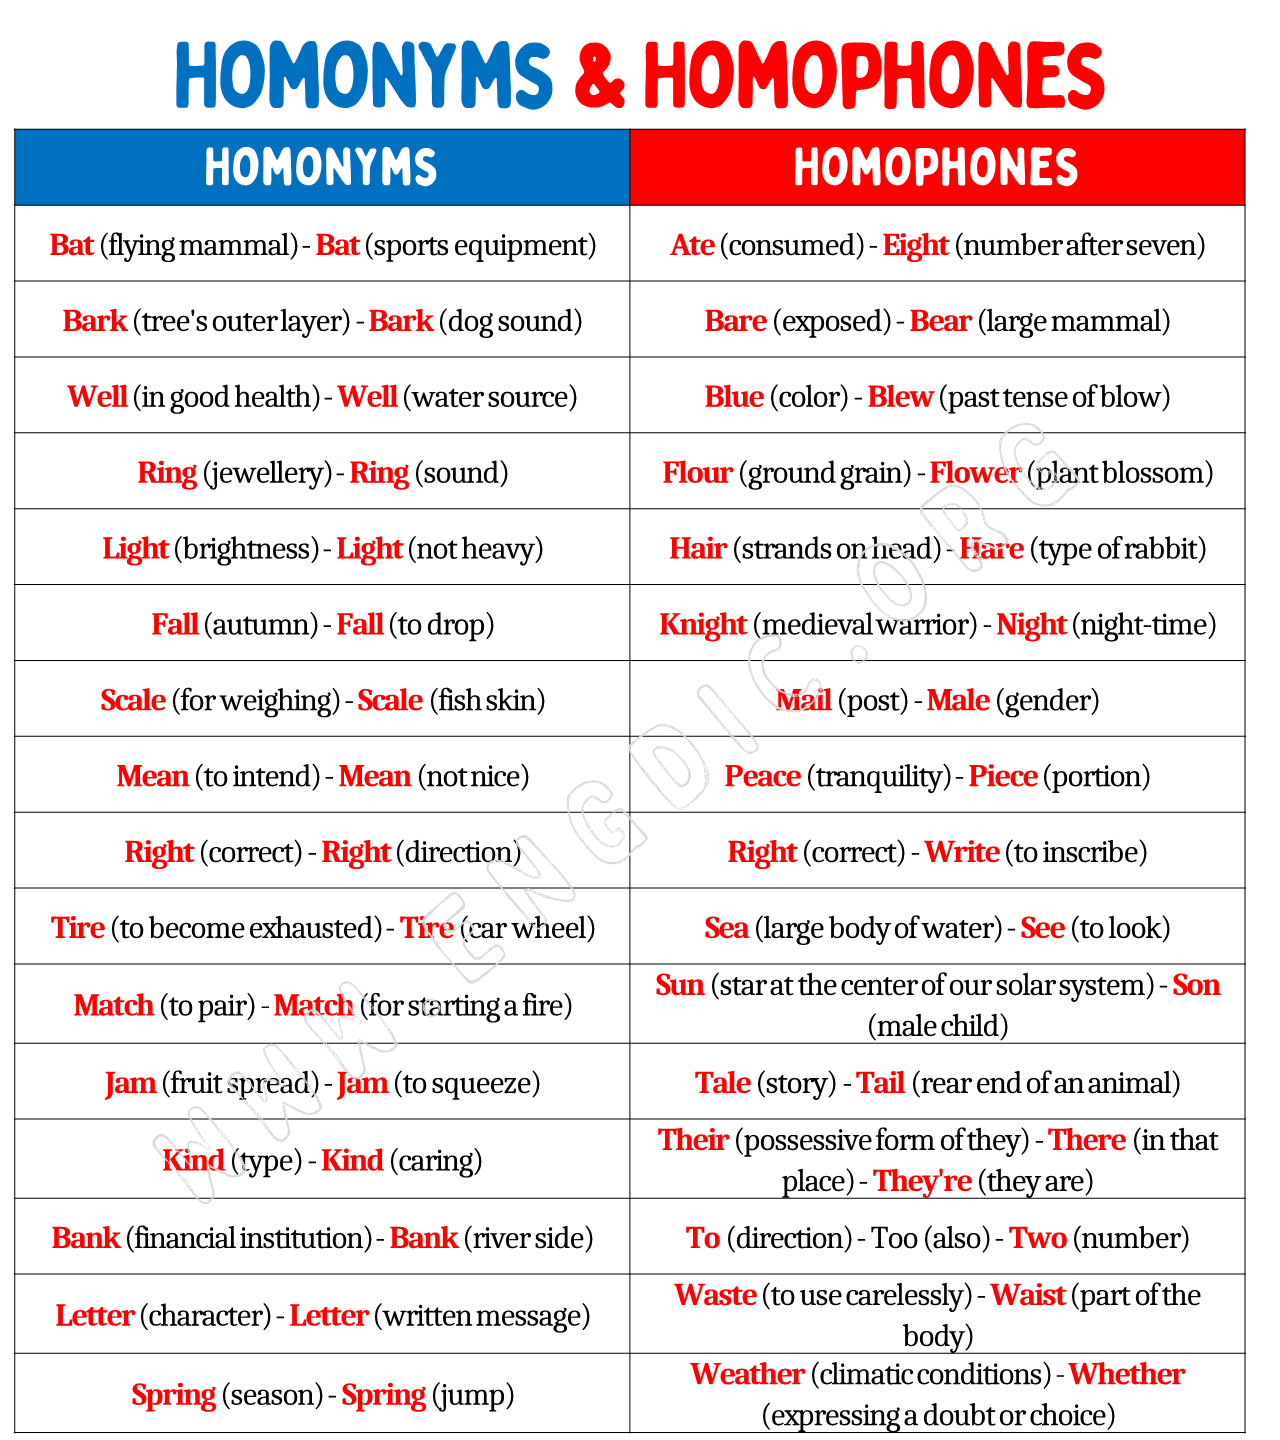 Homonyms & Homophones